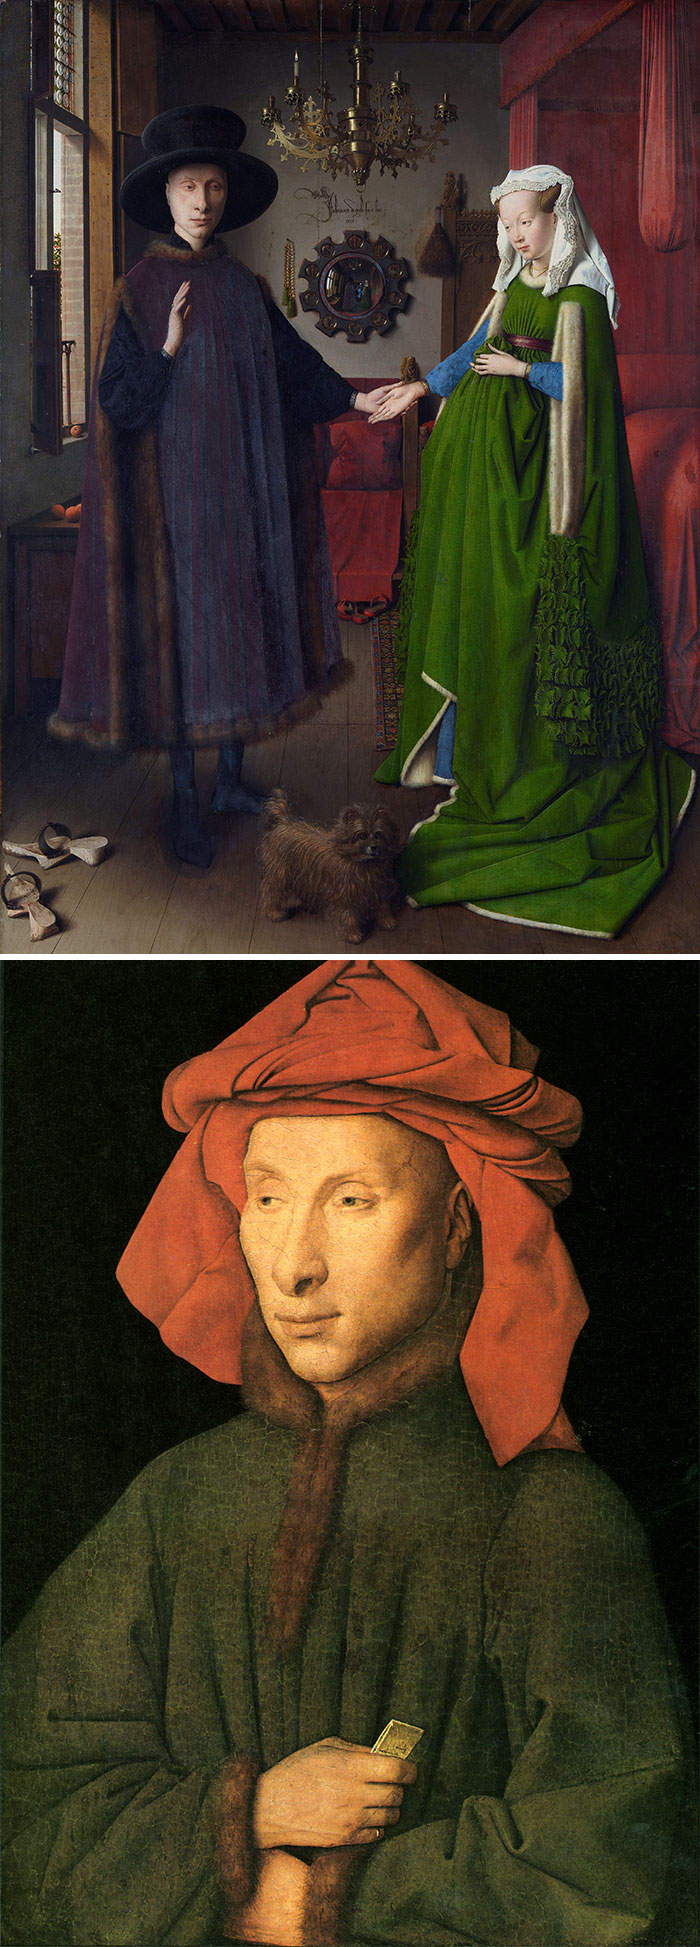 If Everyone – Including The Women – Looks Like Putin, Then It’s Van Eyck